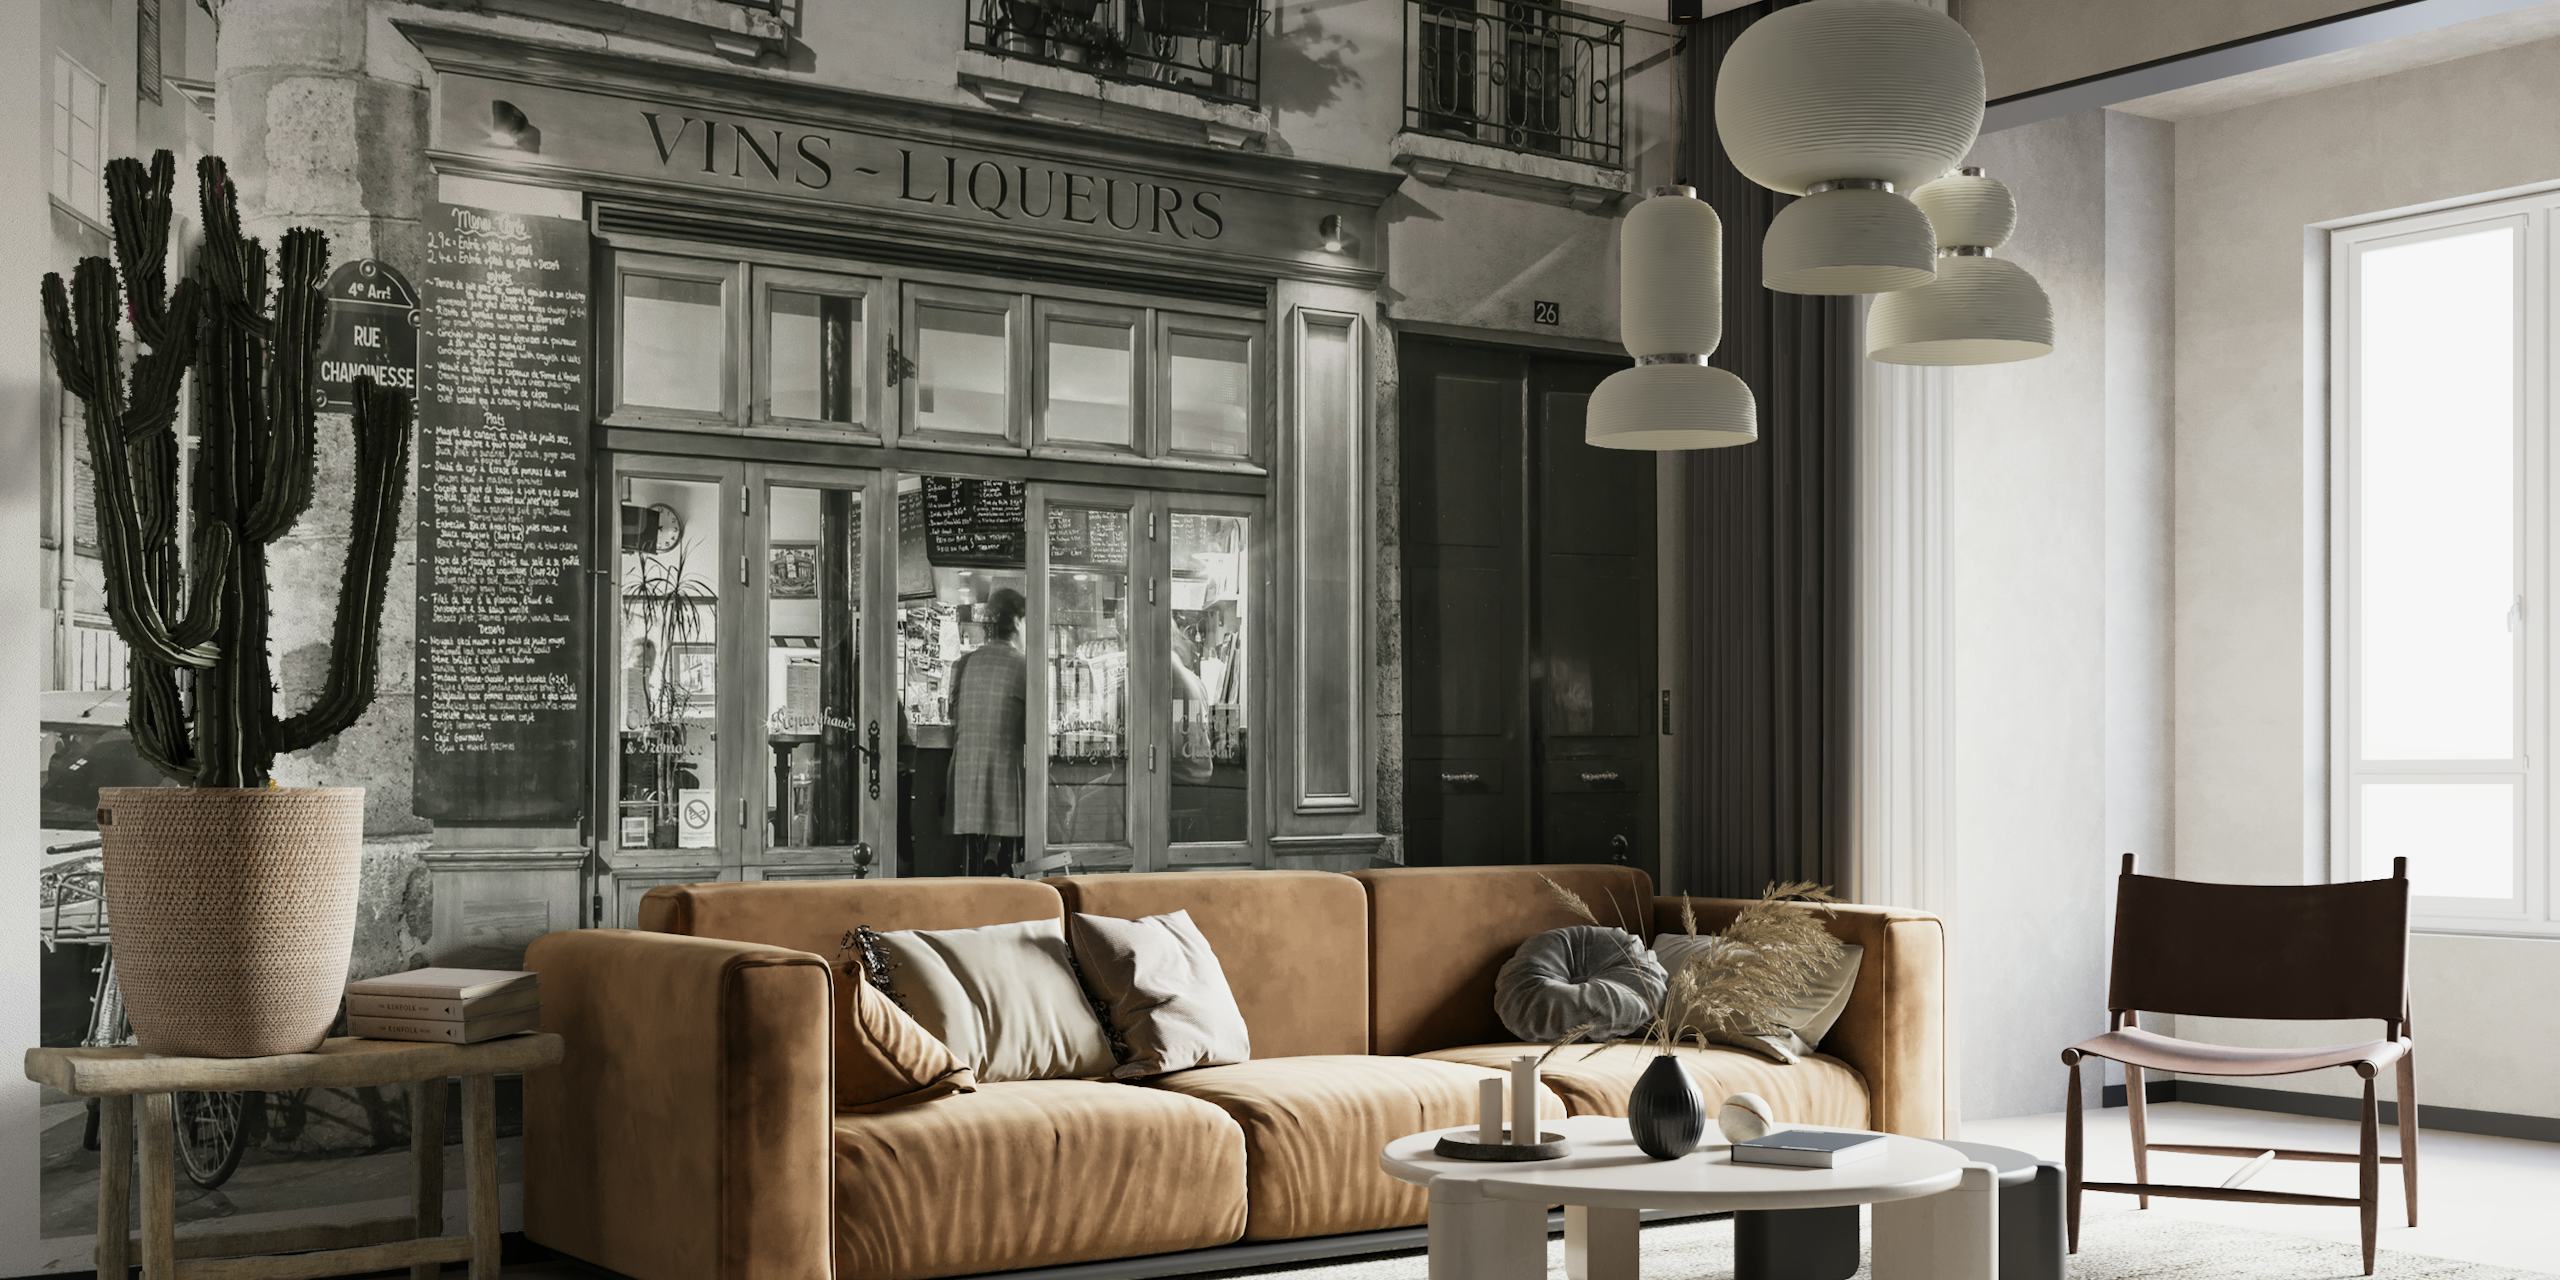 Cafe in paris behang